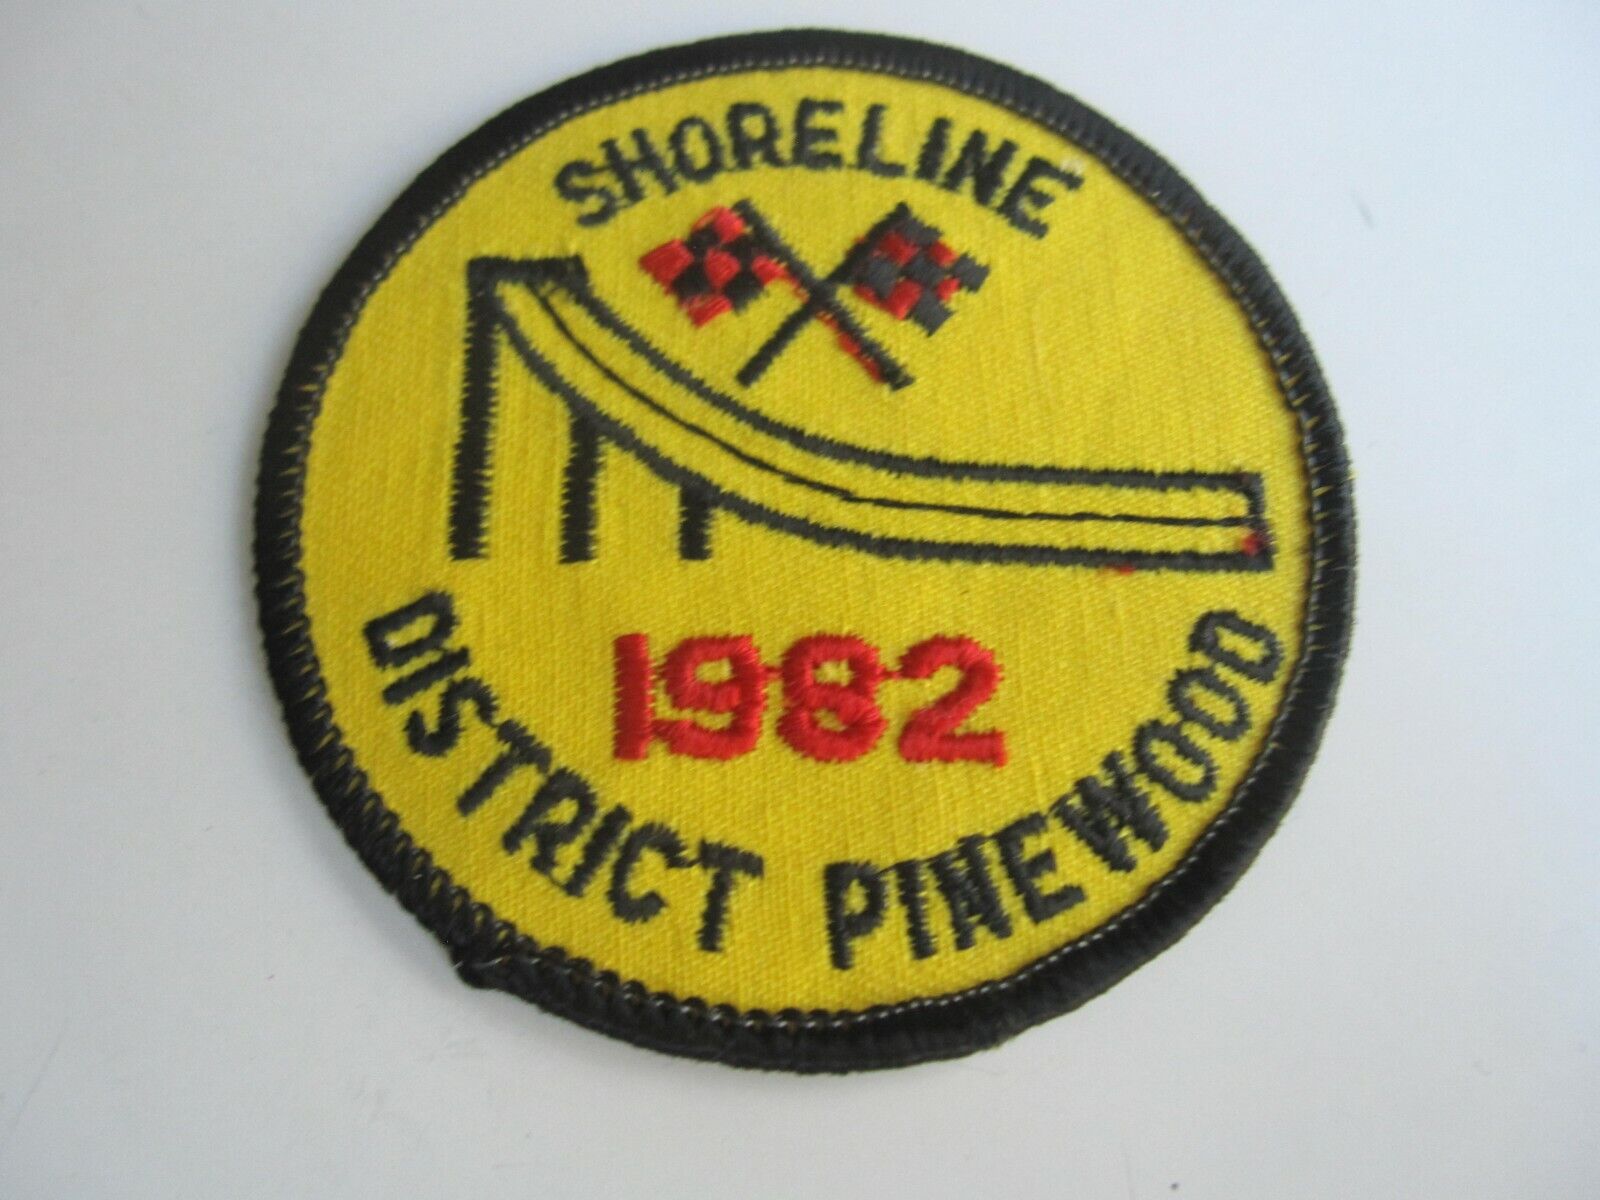 Vintage 1982 BSA Scouting Shoreline District Pinewood Derby Patch BIS